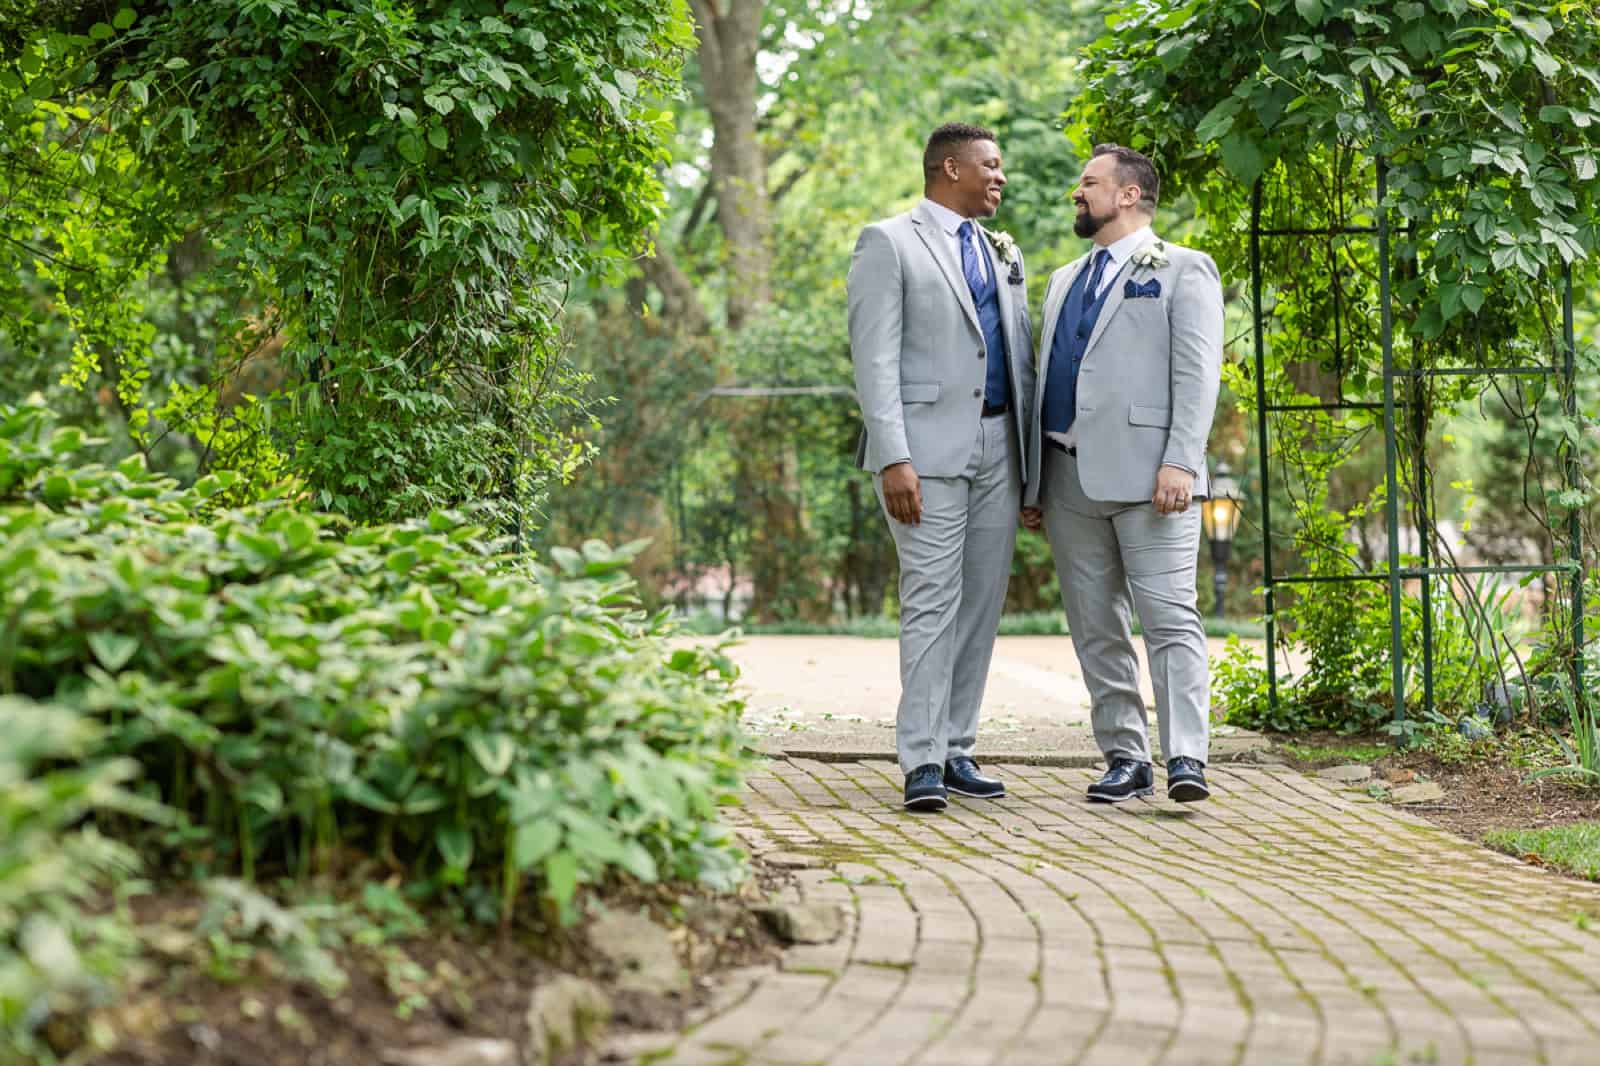 Male same-sex couple walking in garden